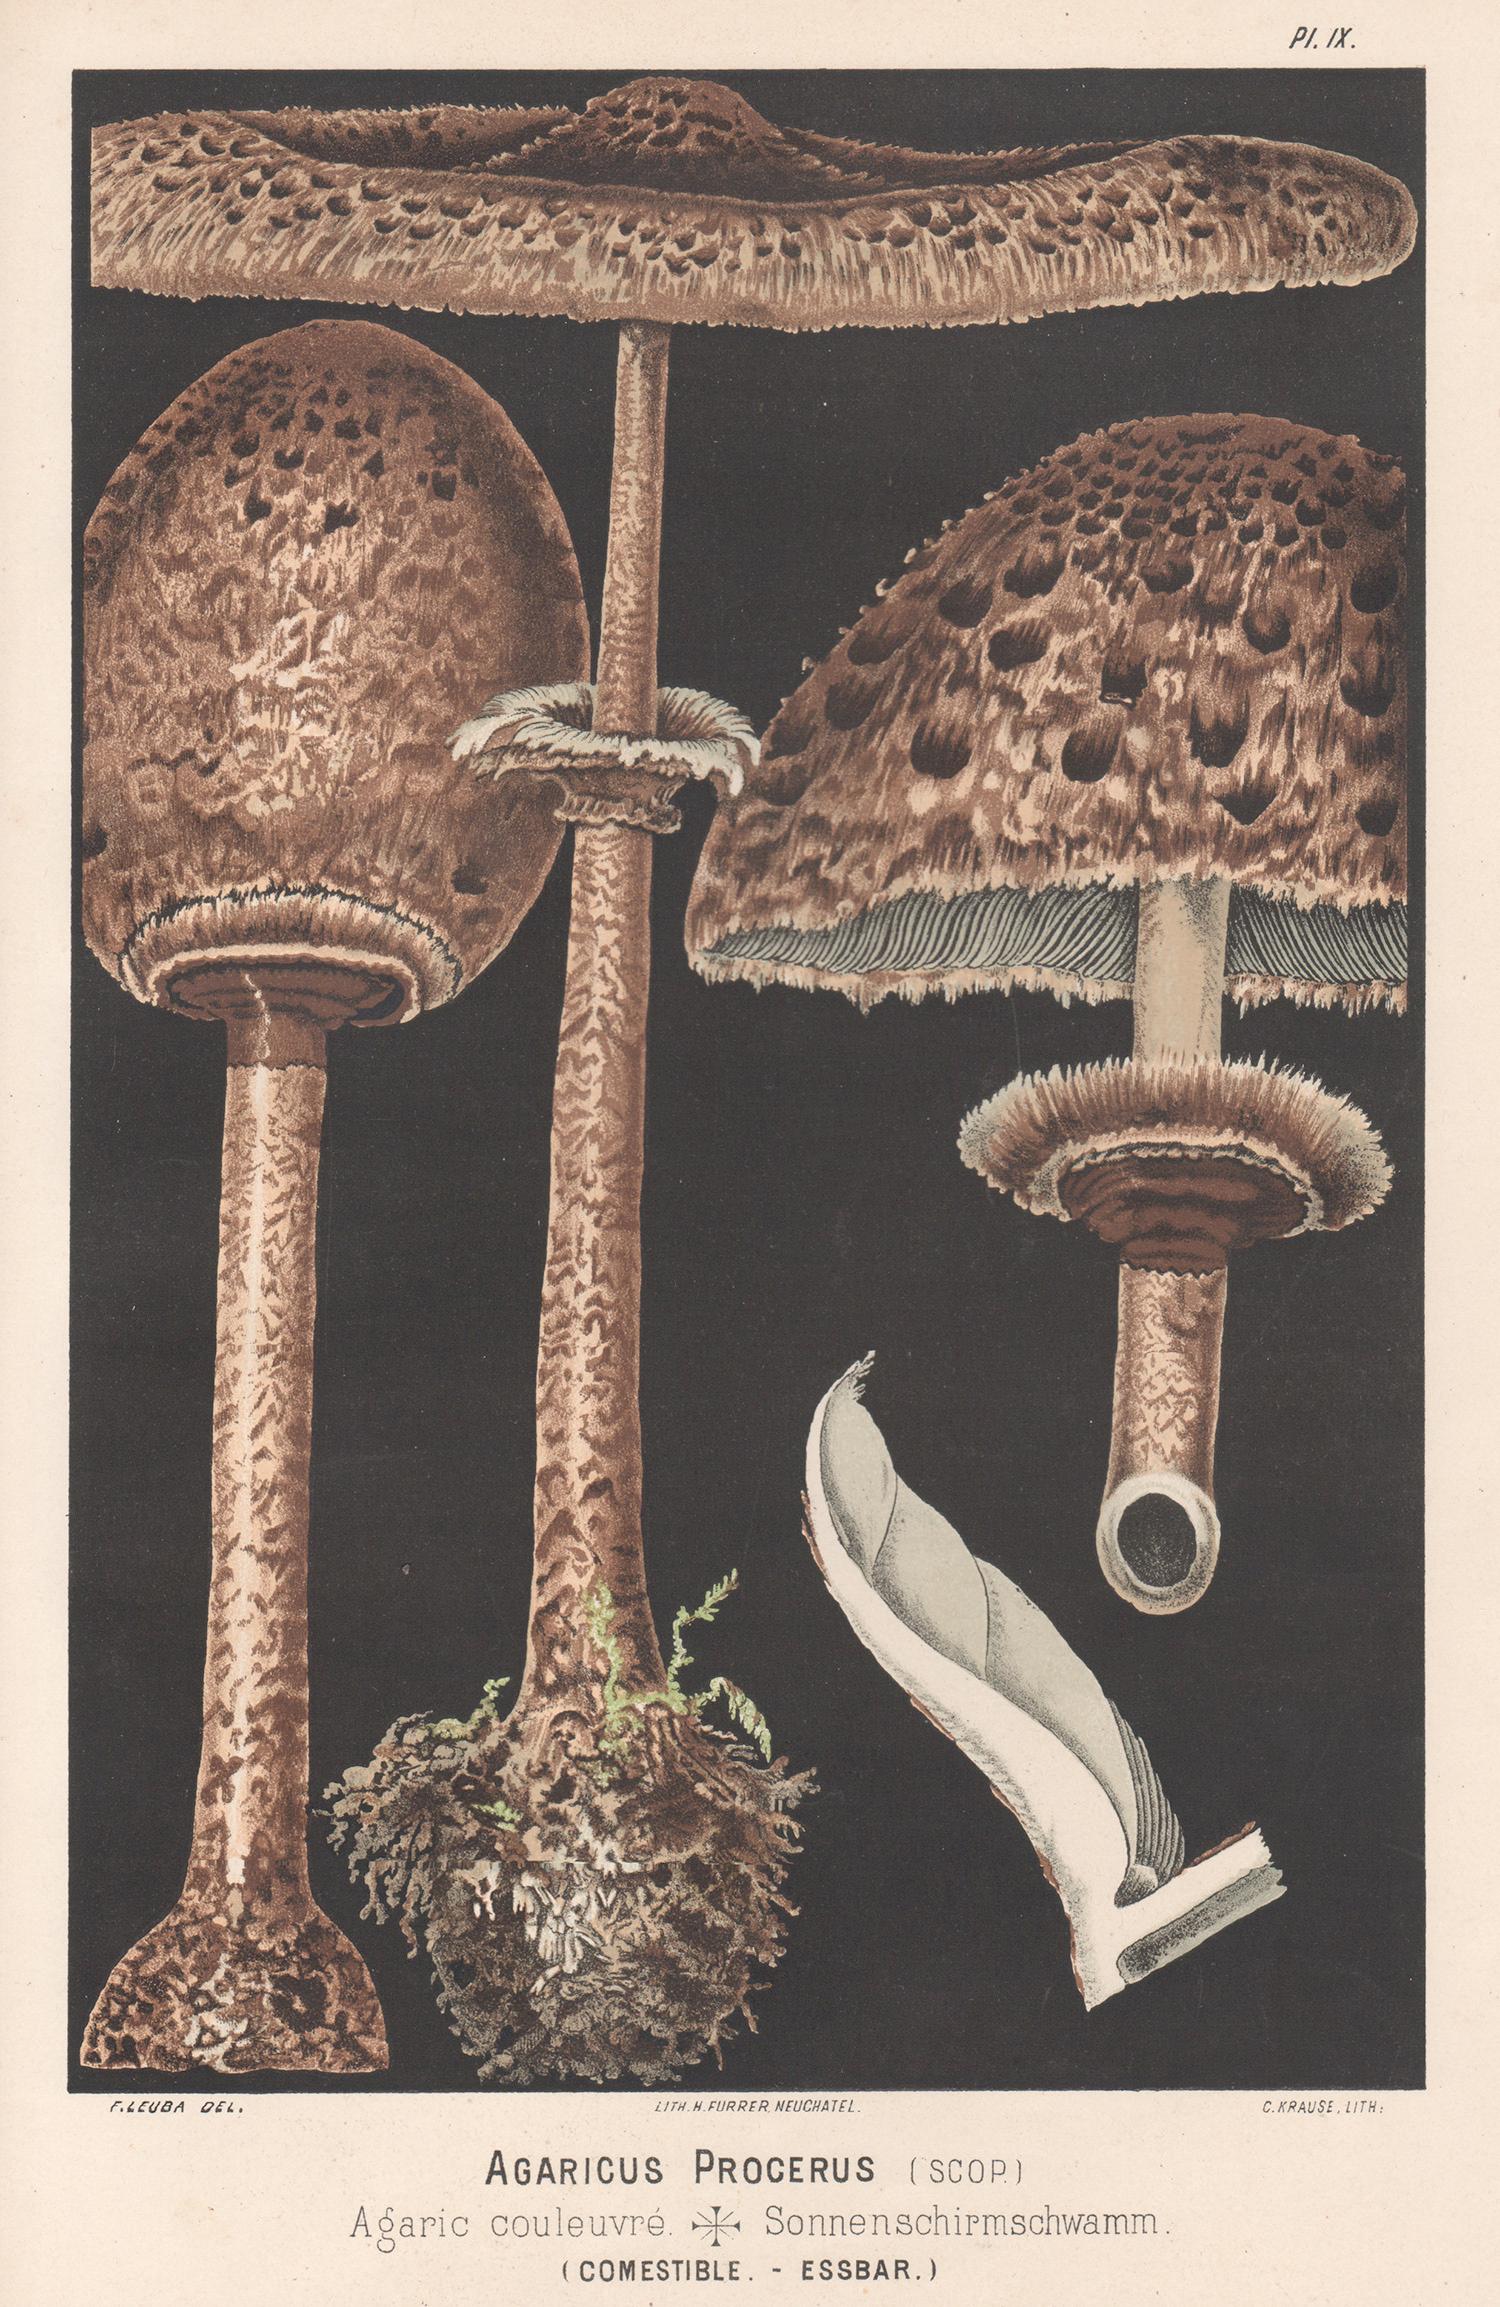 H Furrer after Fritz Leuba Still-Life Print - Agaricus Procerus, Fritz Leuba antique mushroom fungi chromolithograph, 1890